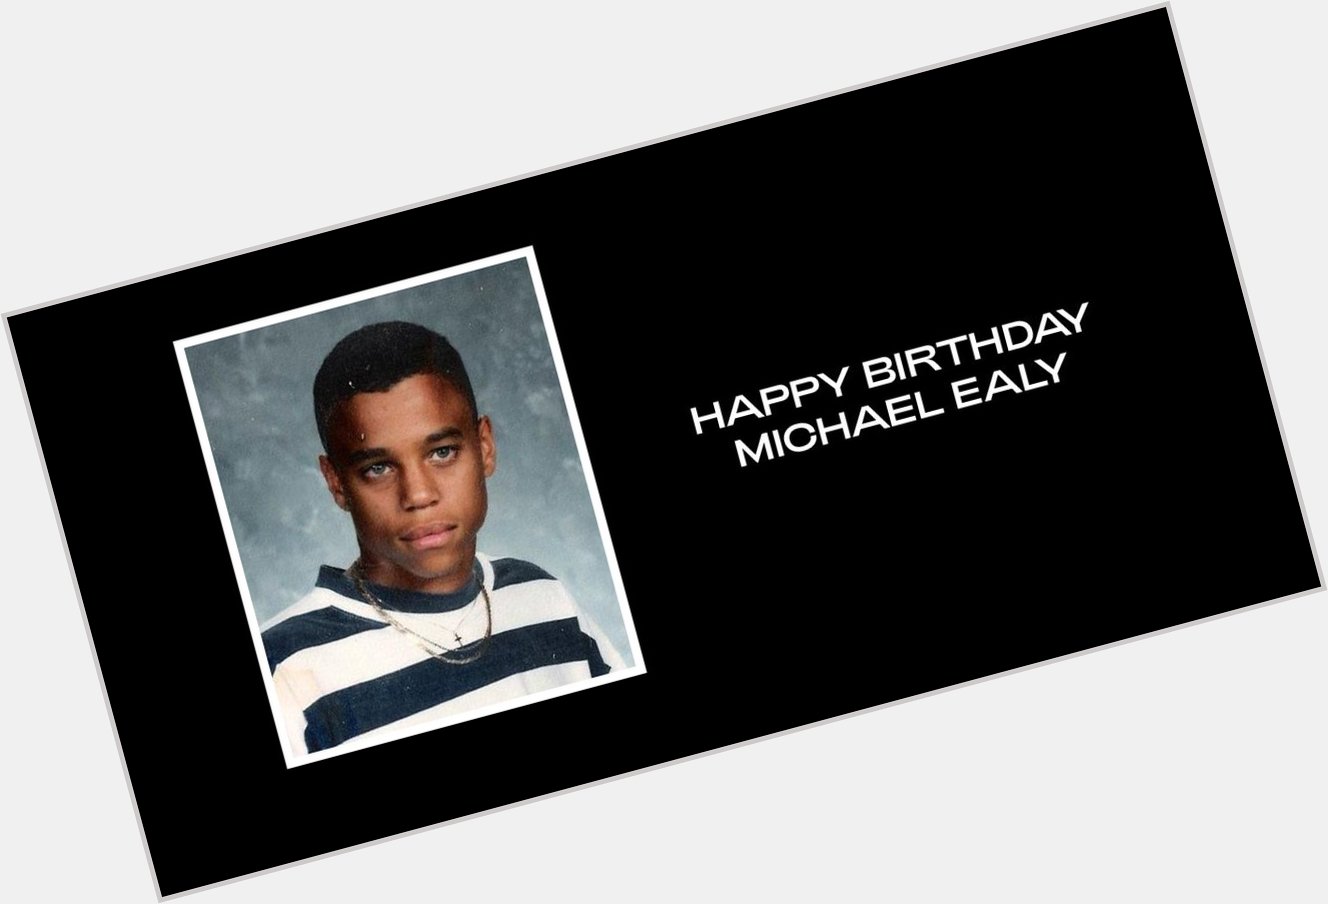  Happy Birthday Michael Ealy, Barack Obama & Meghan Markle  